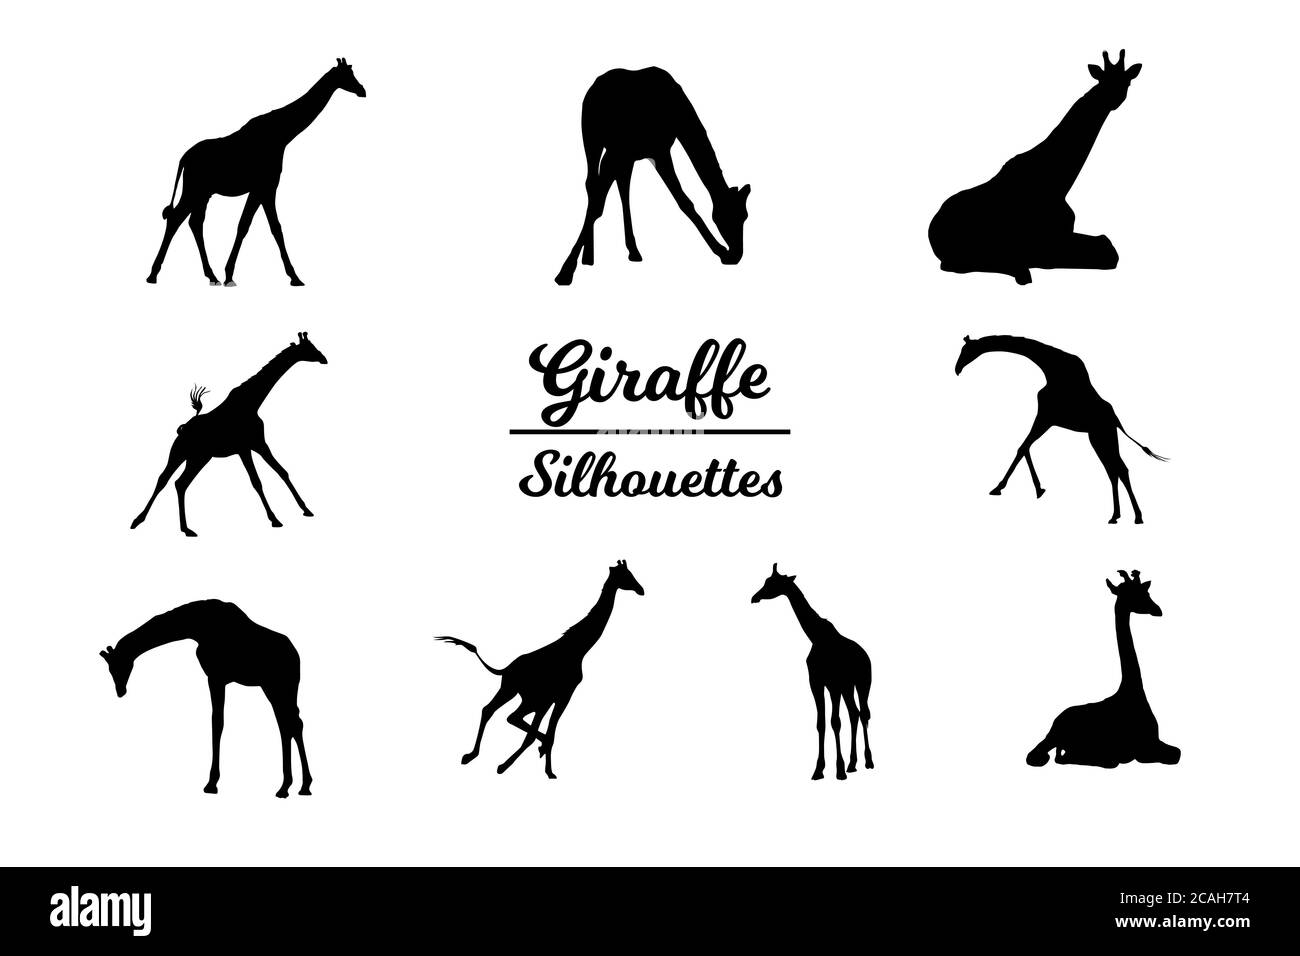 Giraffe animal silhouettes. Black and white outline. Stock Photo